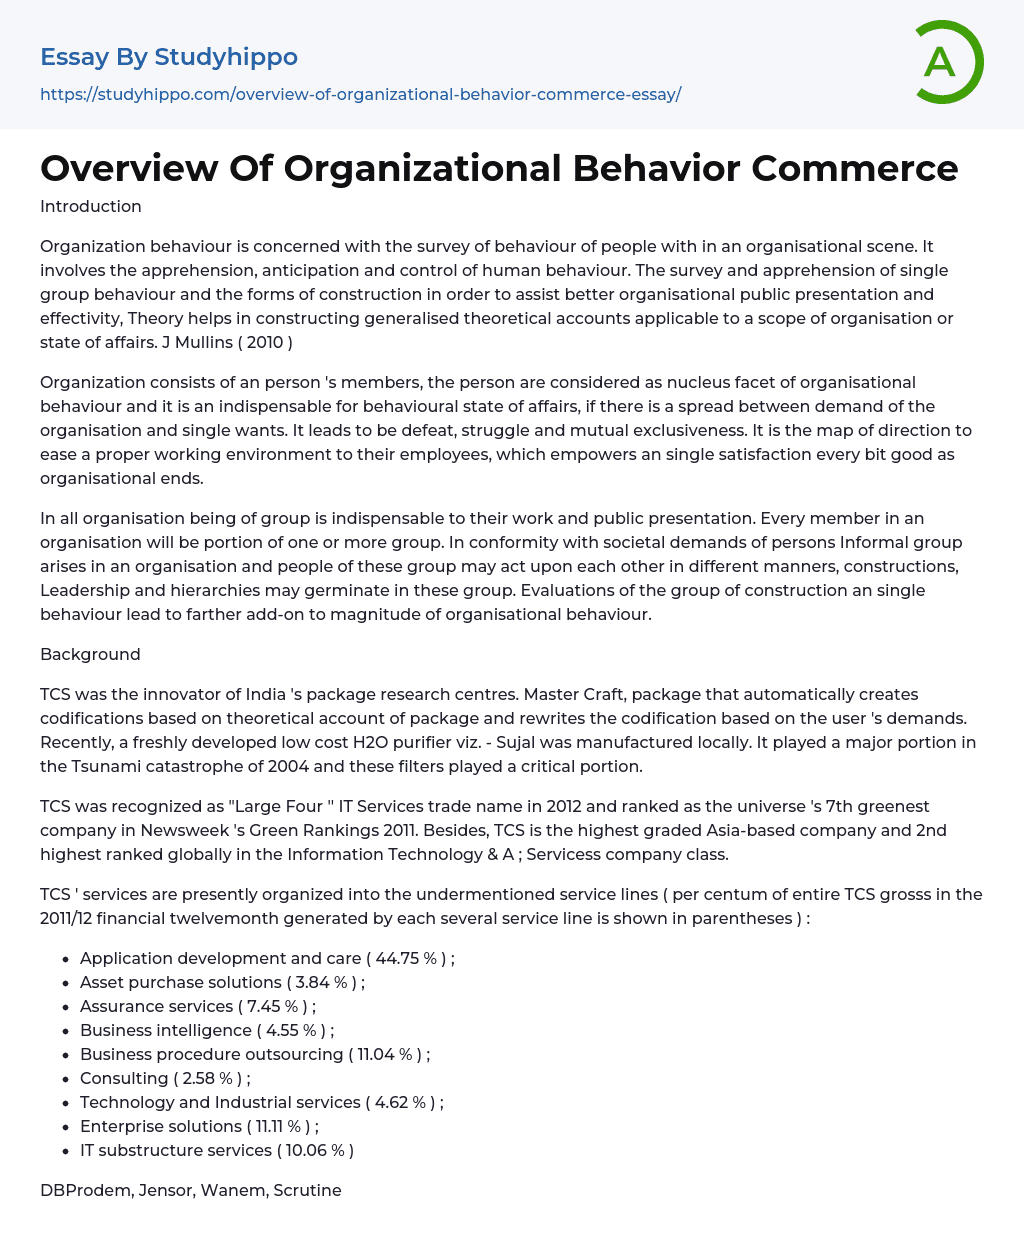 Overview Of Organizational Behavior Commerce Essay Example